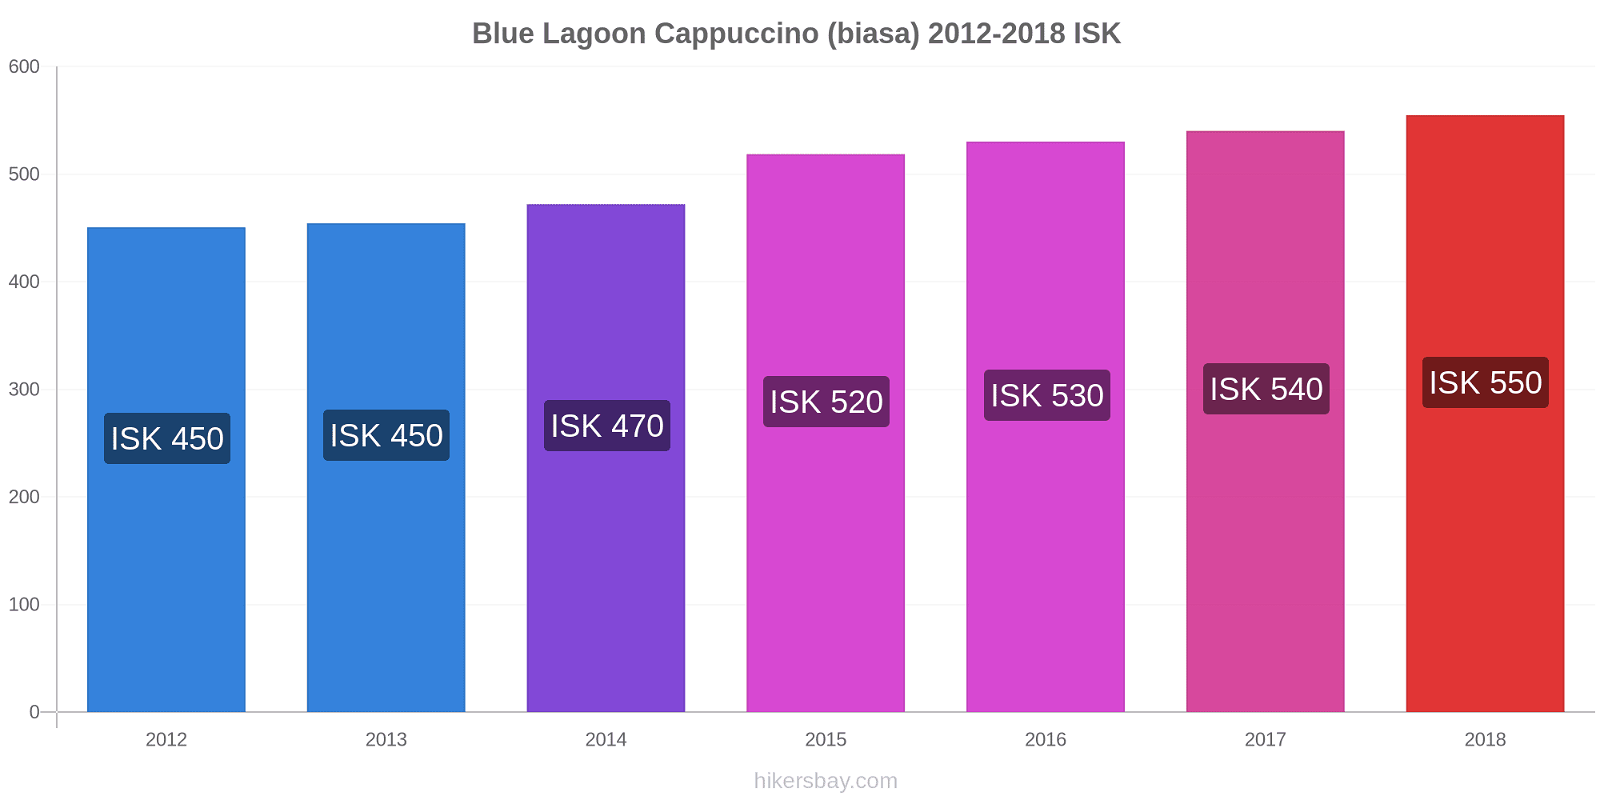 Blue Lagoon perubahan harga Cappuccino (biasa) hikersbay.com